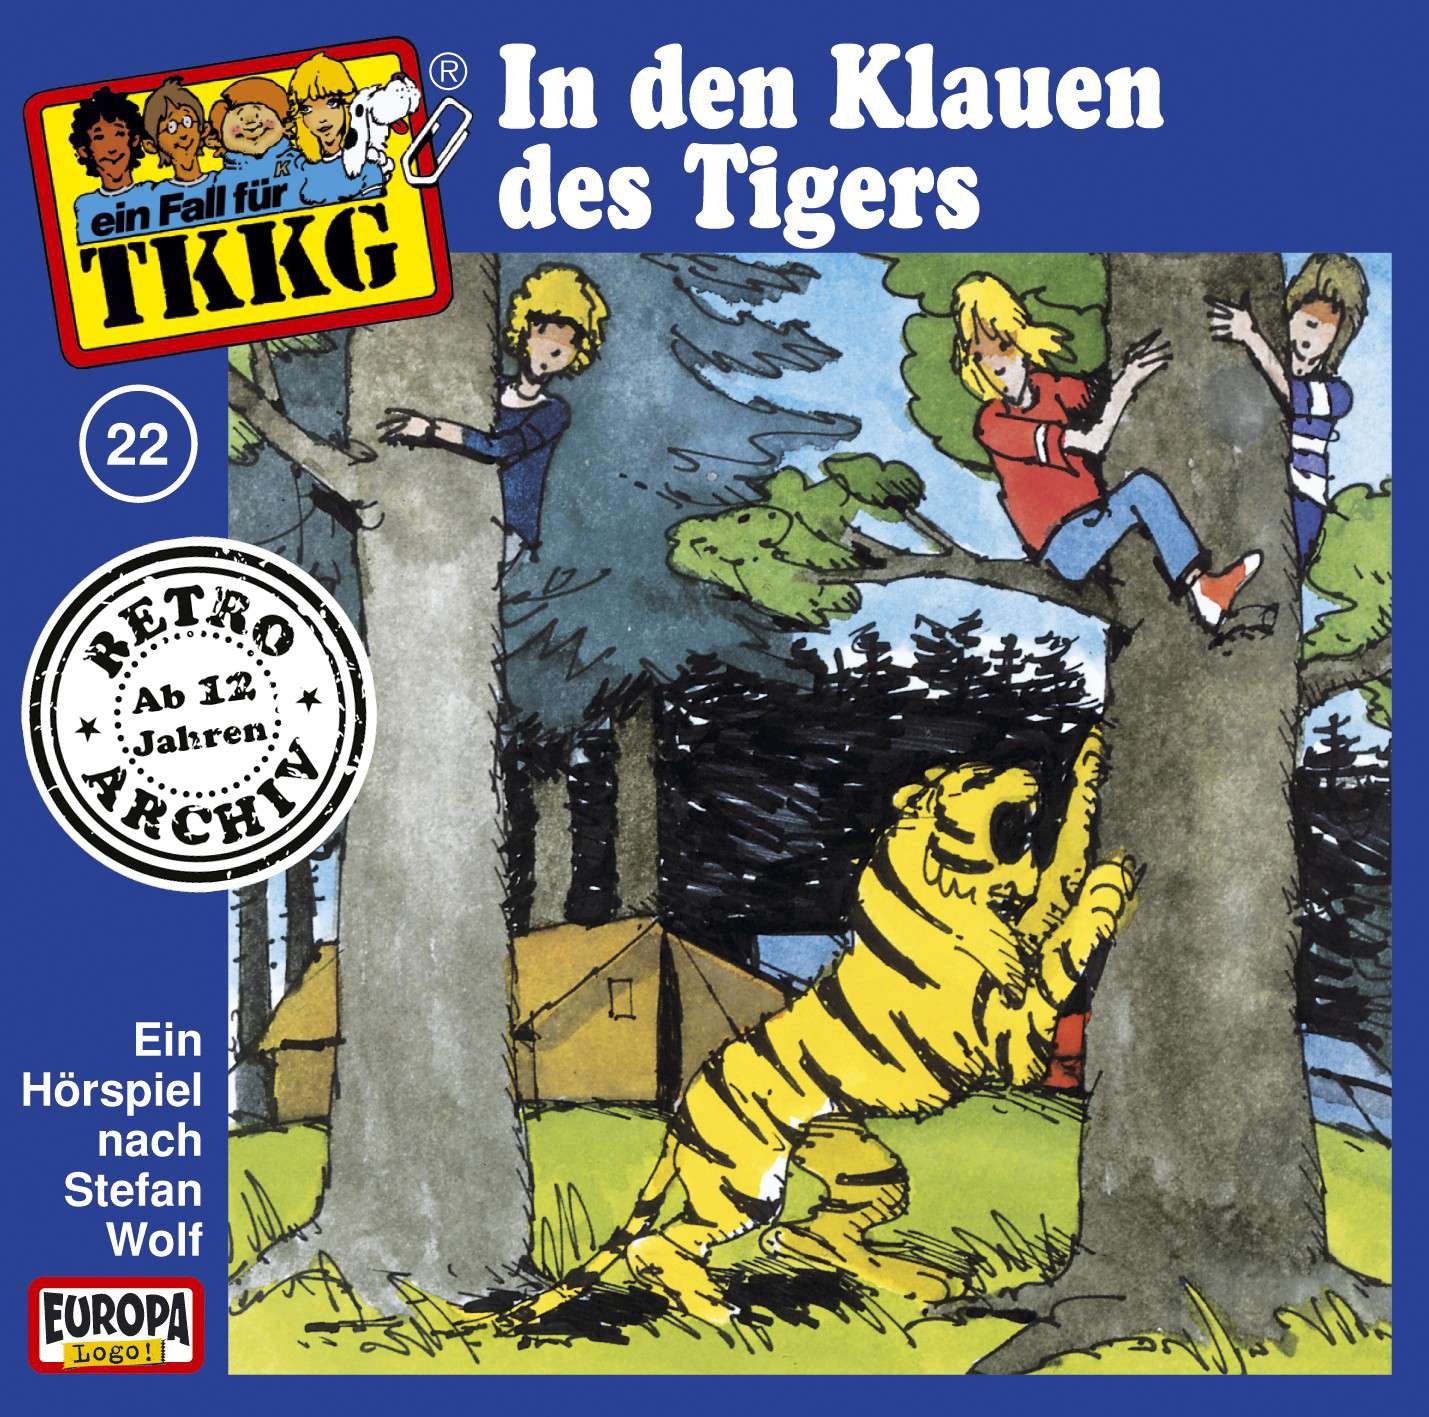 TKKG Retro-Archiv: In den Klauen des Tigers